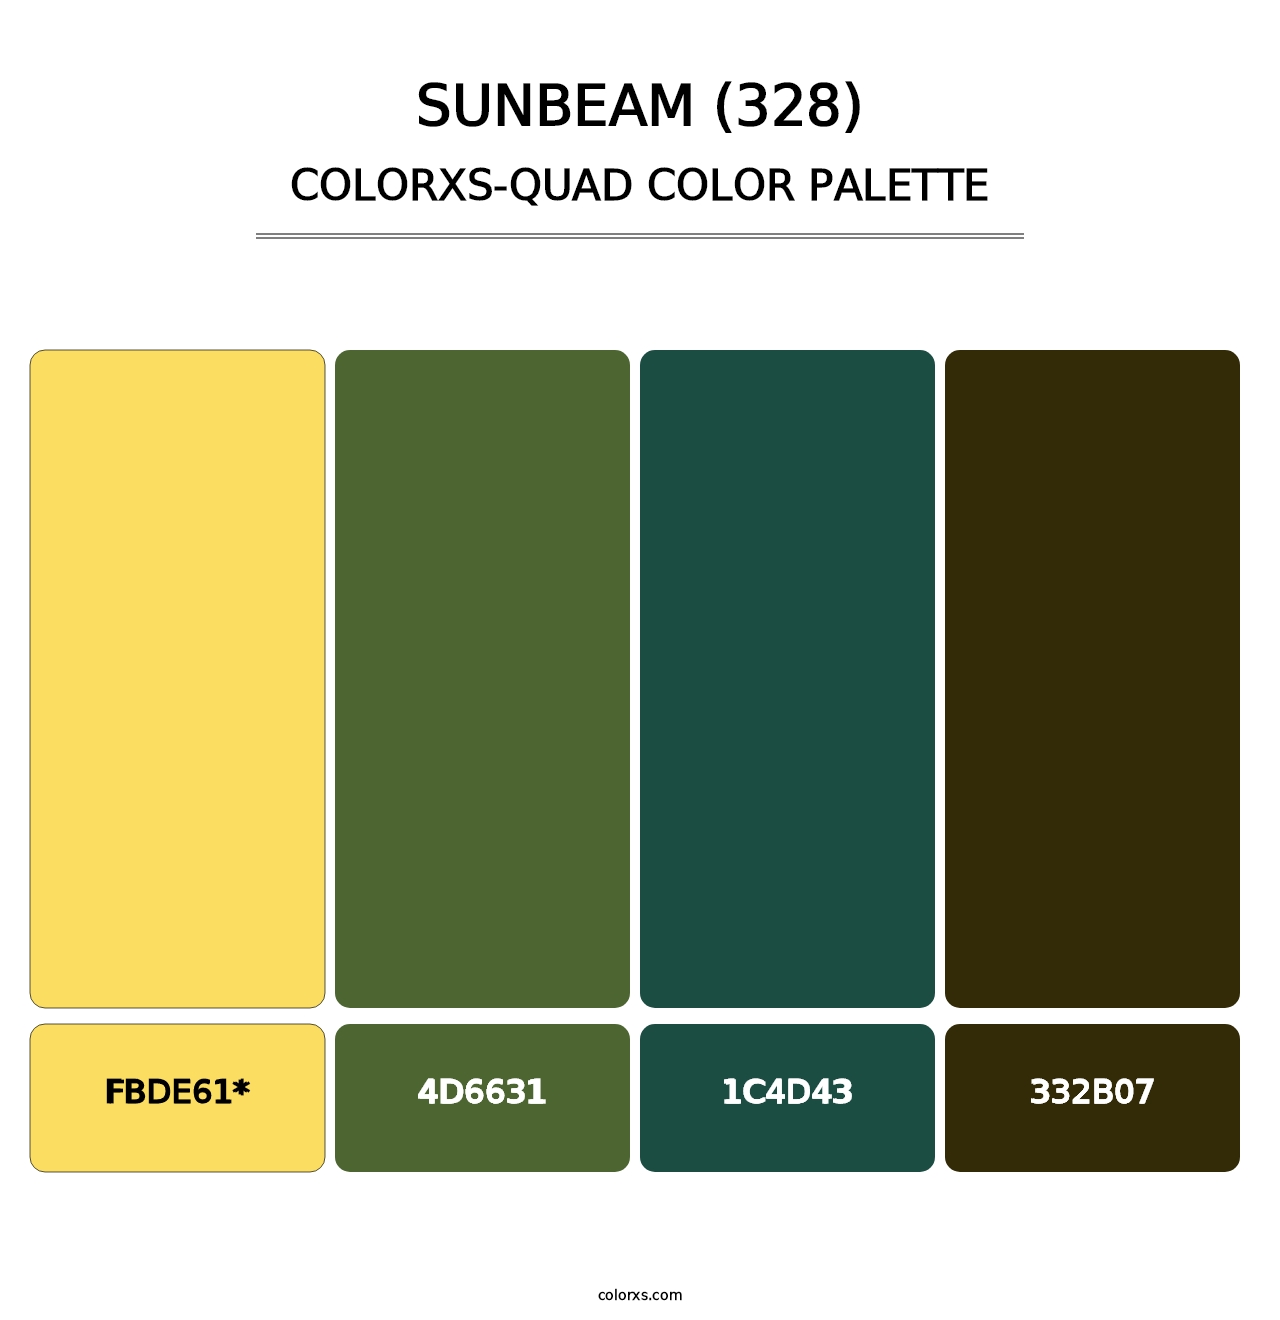 Sunbeam (328) - Colorxs Quad Palette